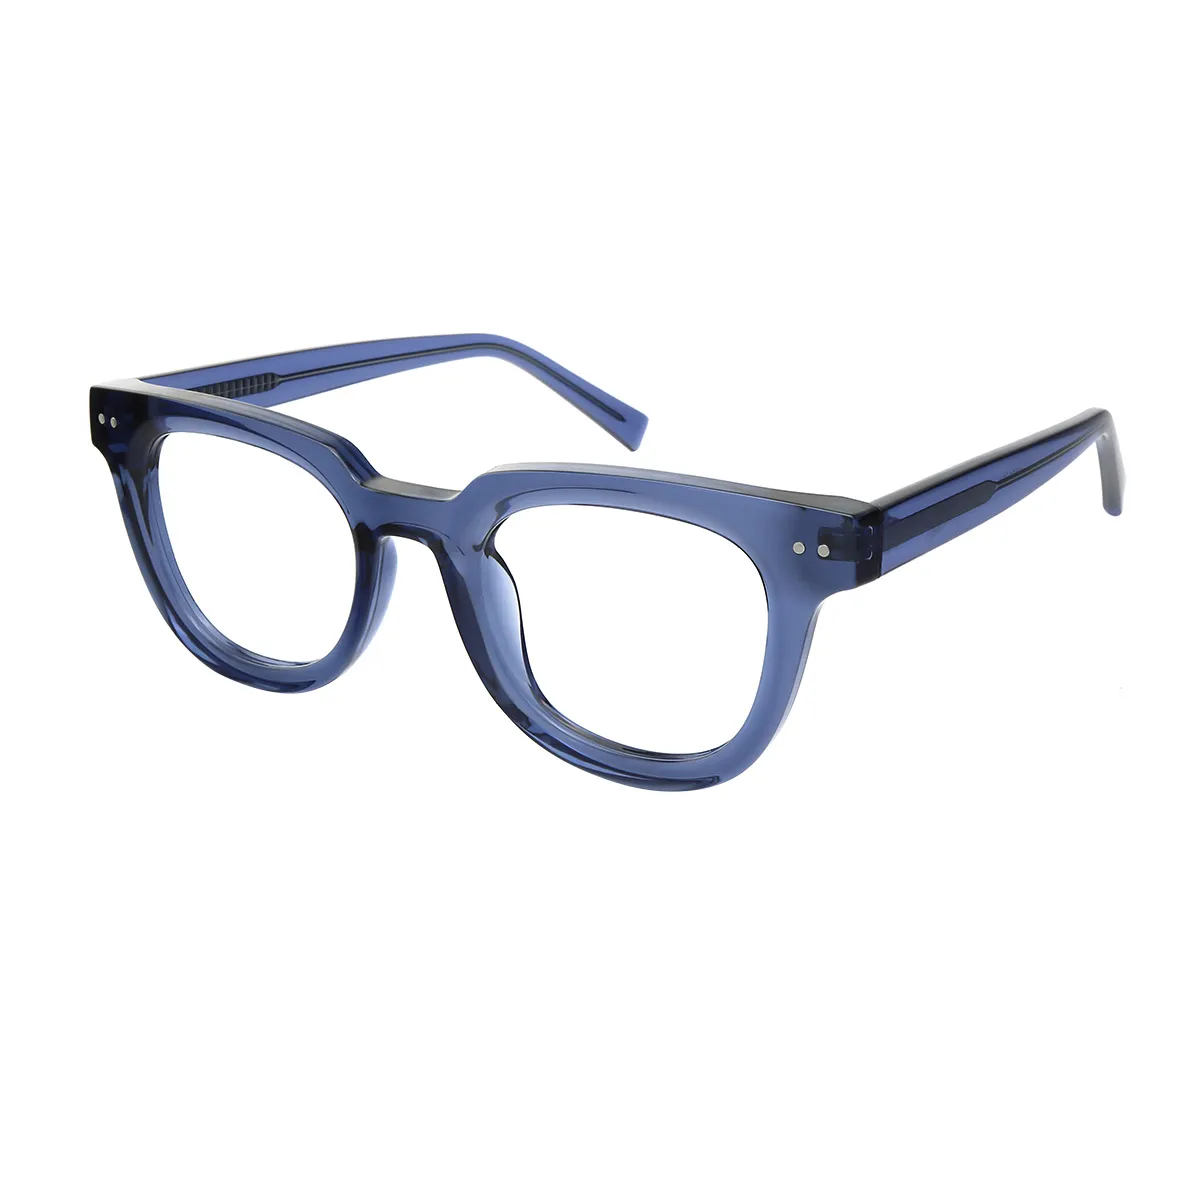 Codex - Square Blue-Translucent Glasses for Men & Women - EFE